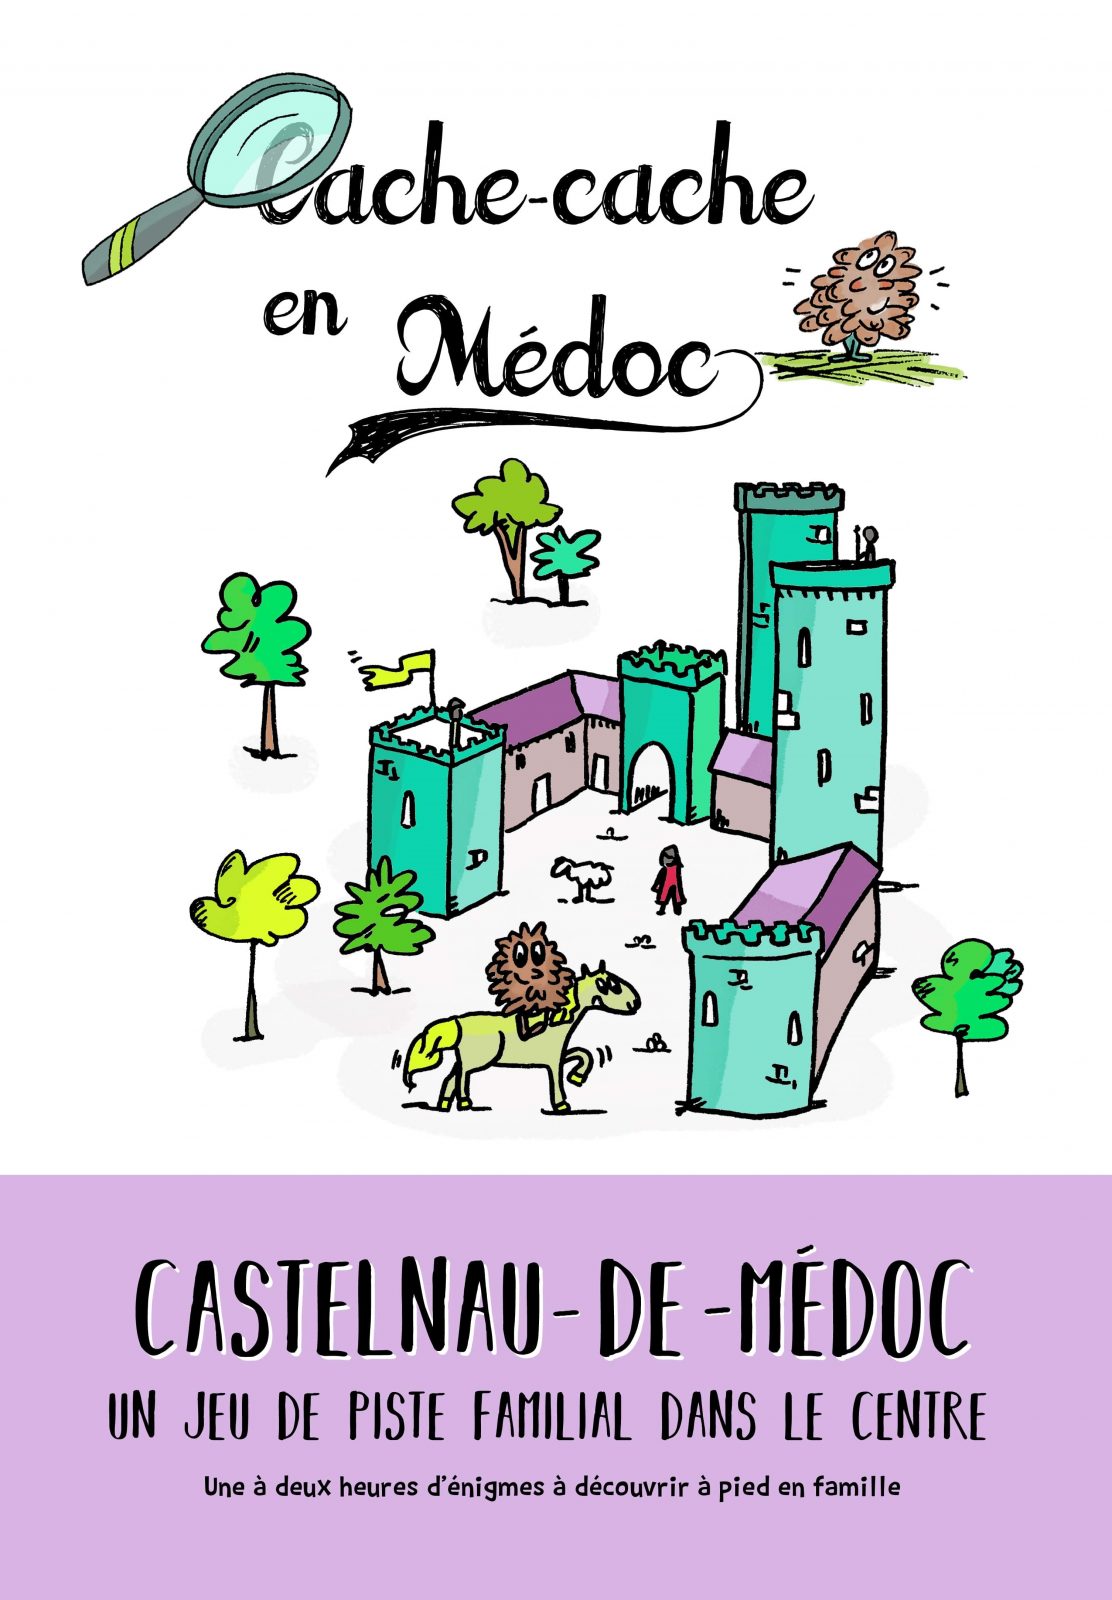 Versteckspiel im Médoc in Castelnau-de-Médoc